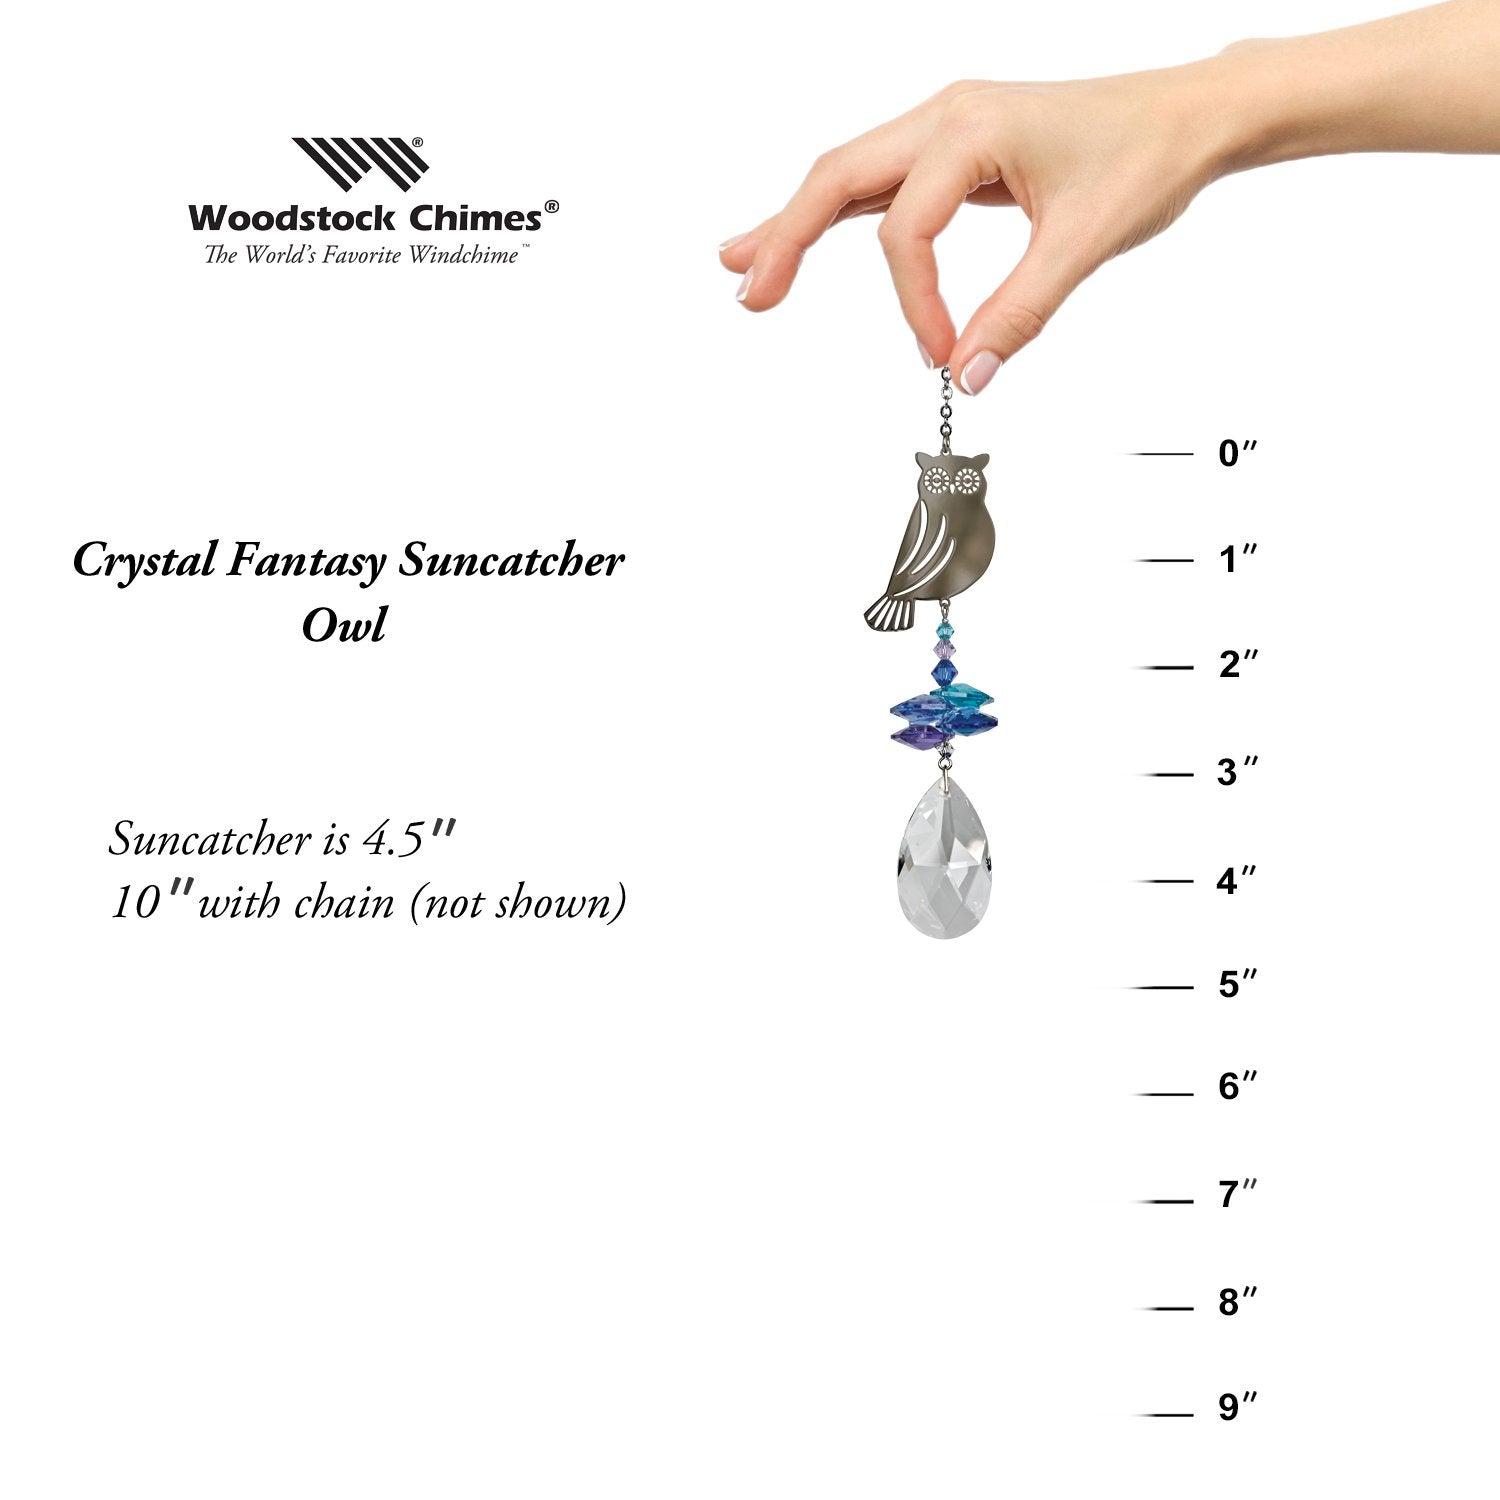 Crystal Fantasy Suncatcher - Owl proportion image